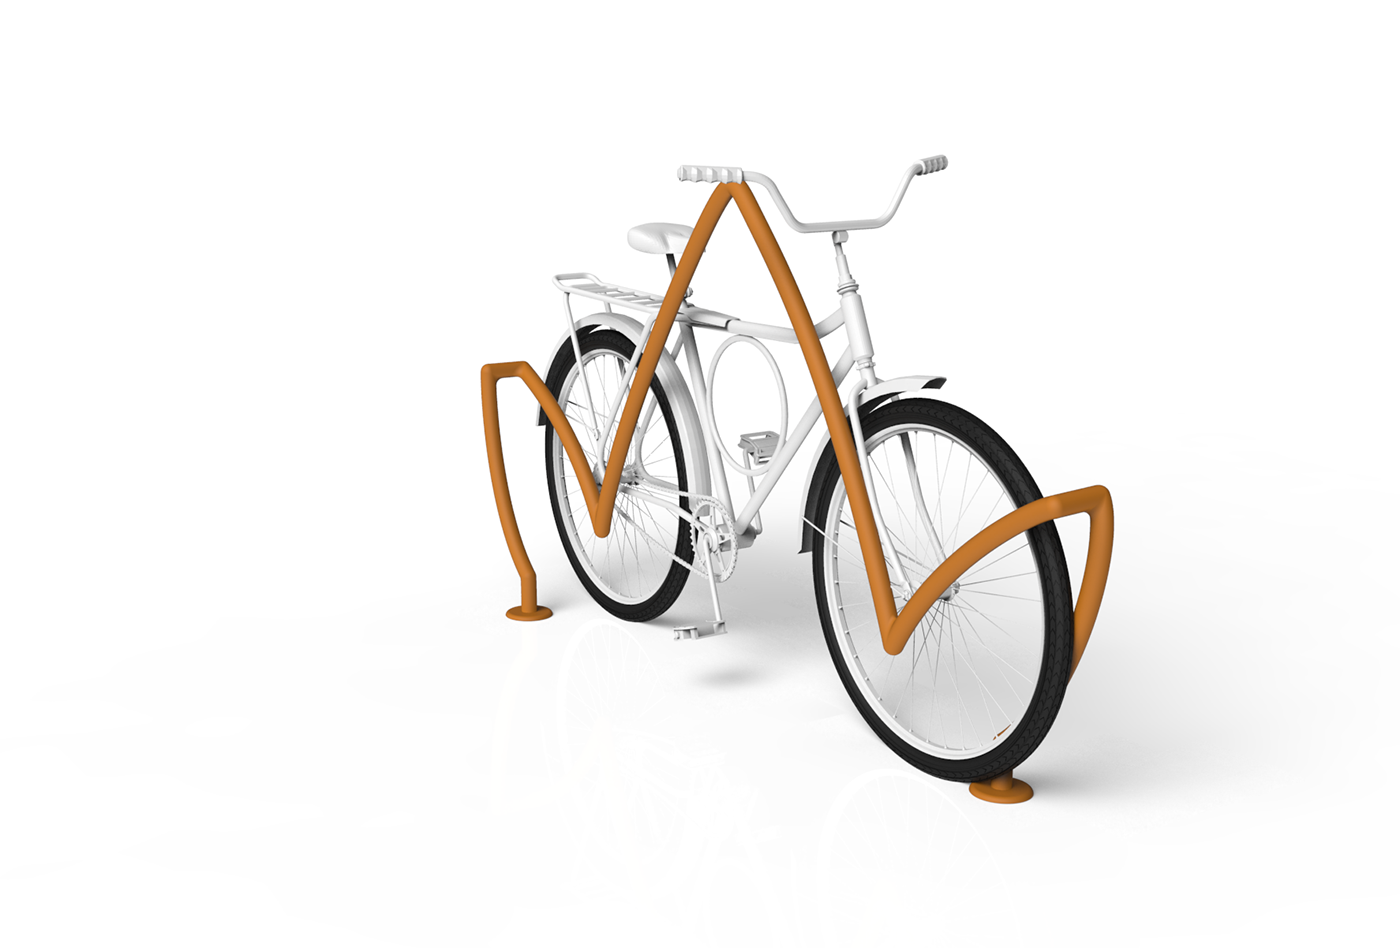 bikerack Bike tulip Holland Urban product design Bicycle city mobility